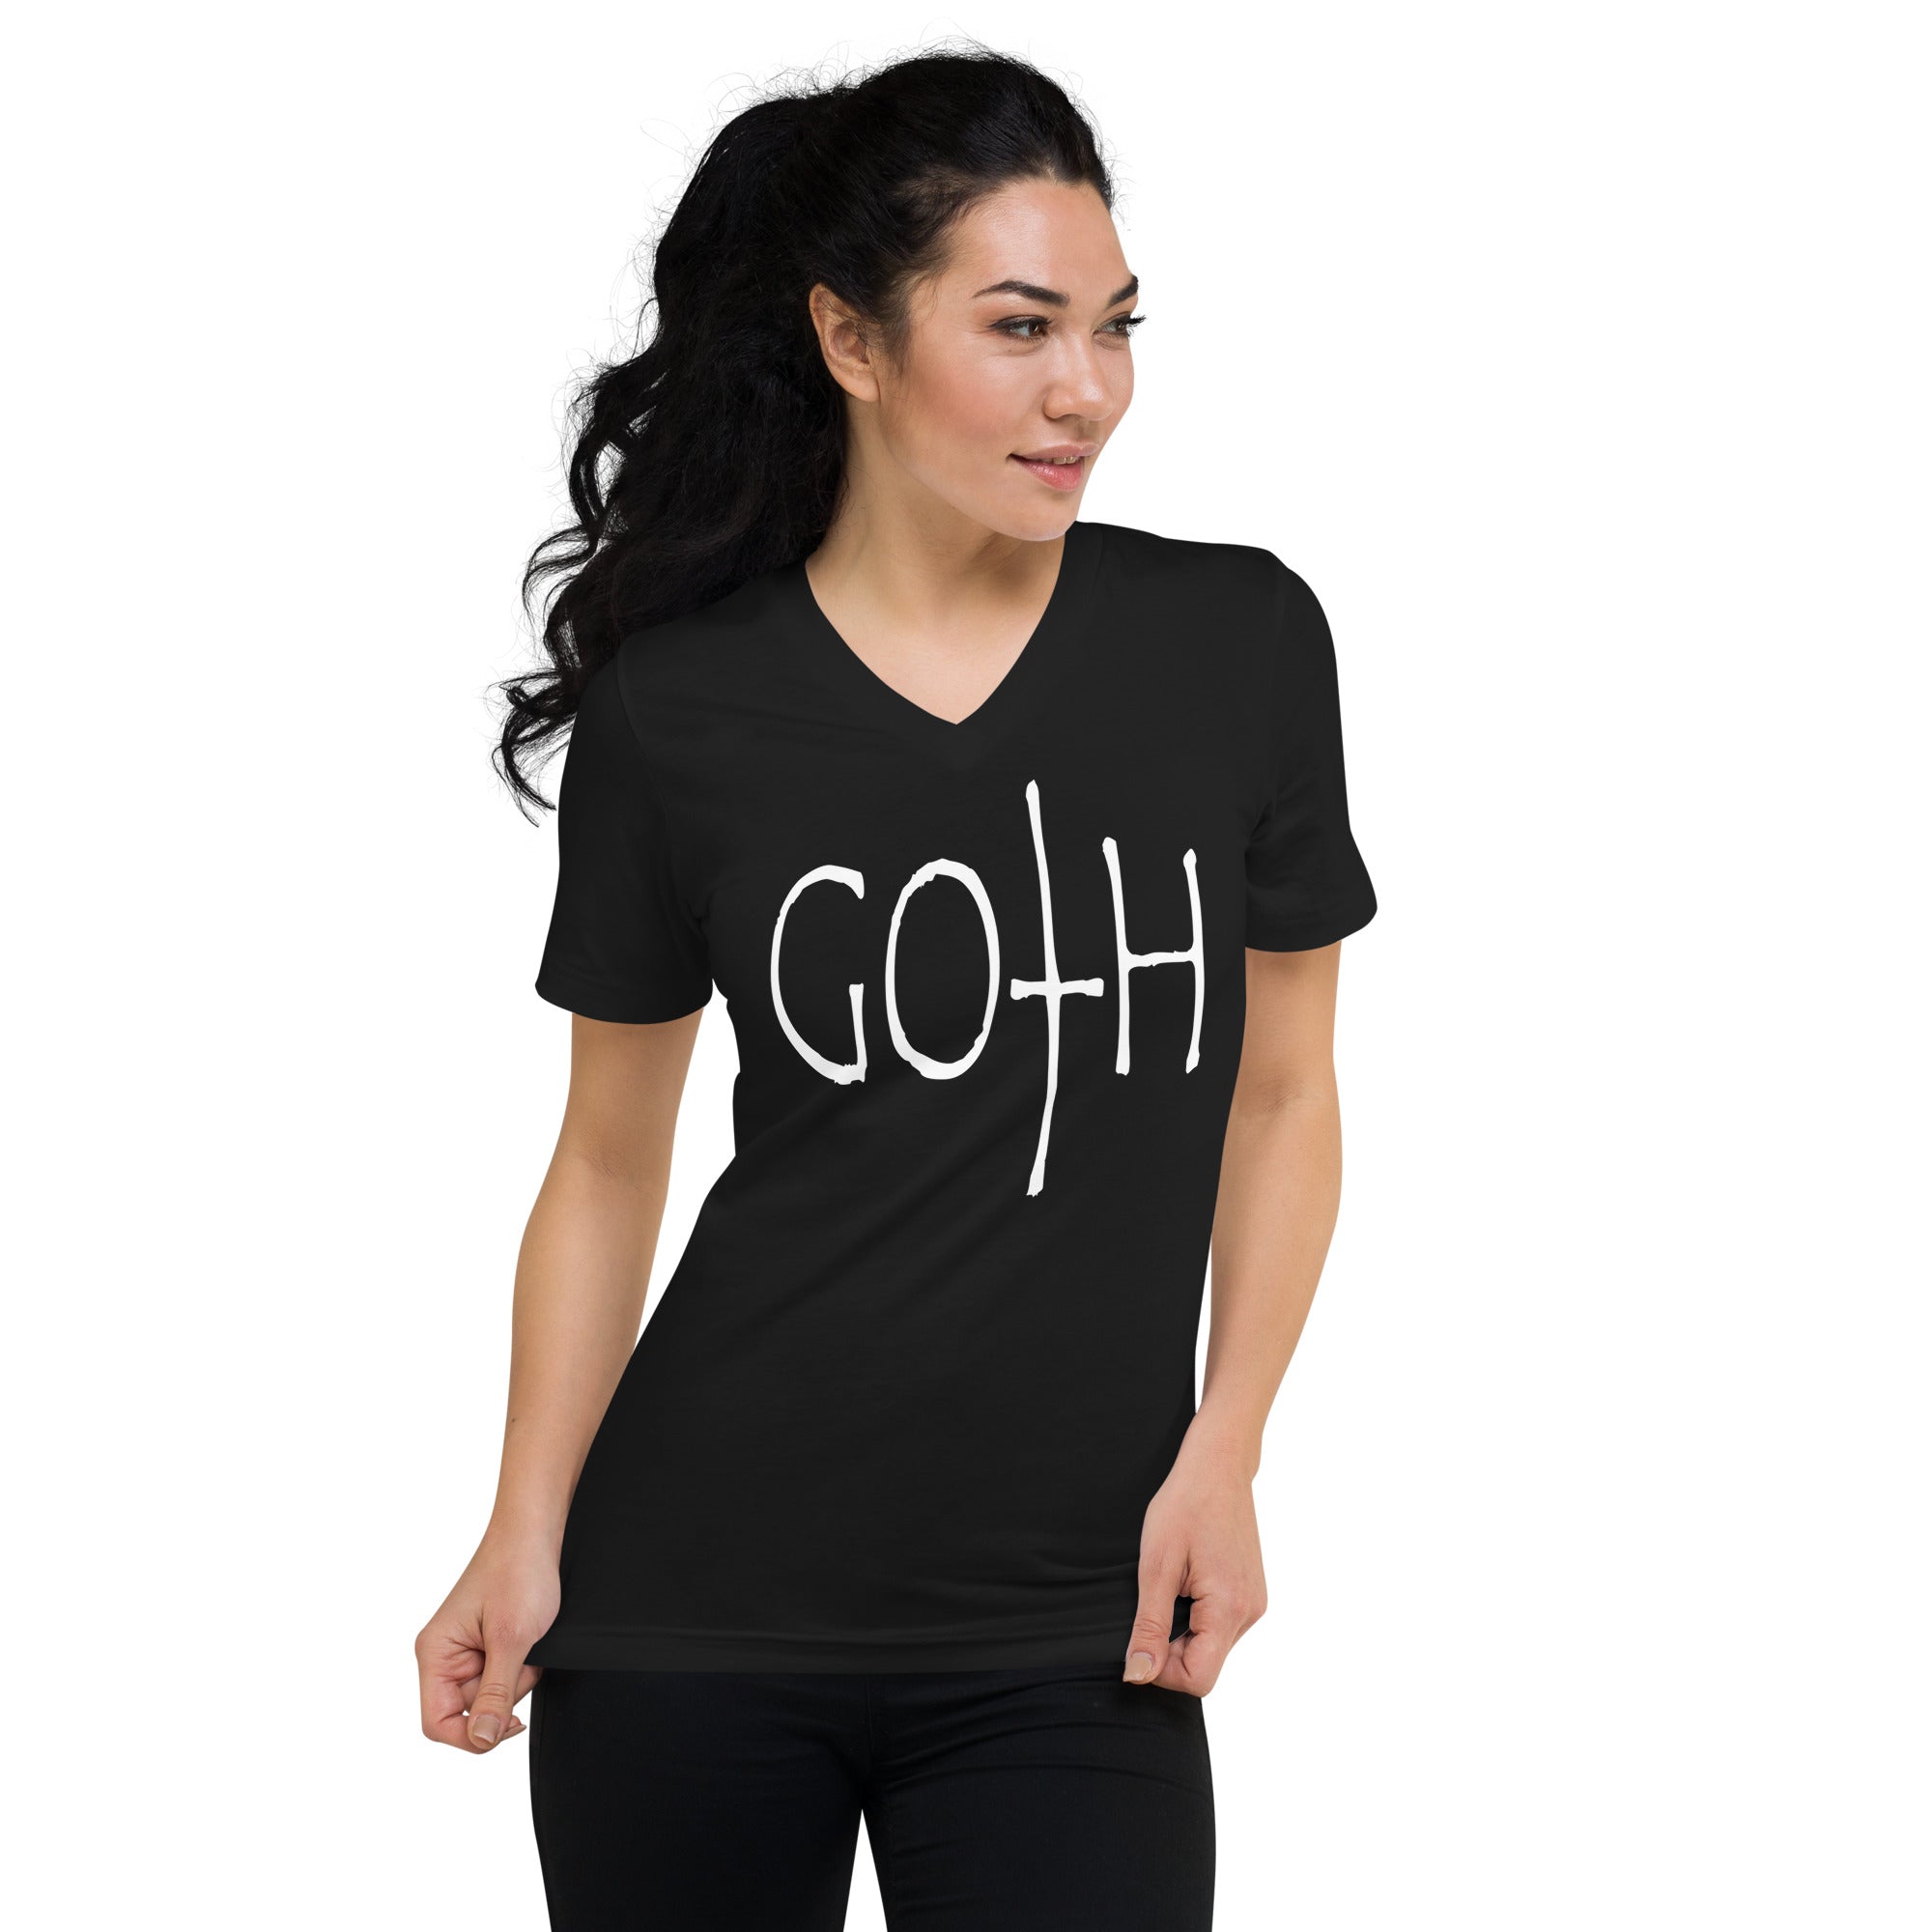 Goth Style Black Women's Short Sleeve V-Neck T-Shirt - Edge of Life Designs